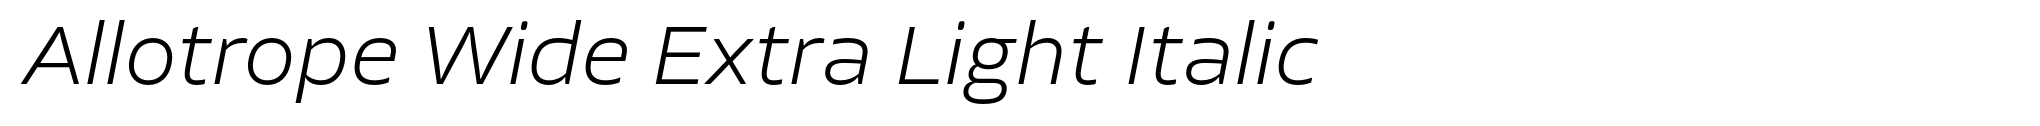 Allotrope Wide Extra Light Italic image